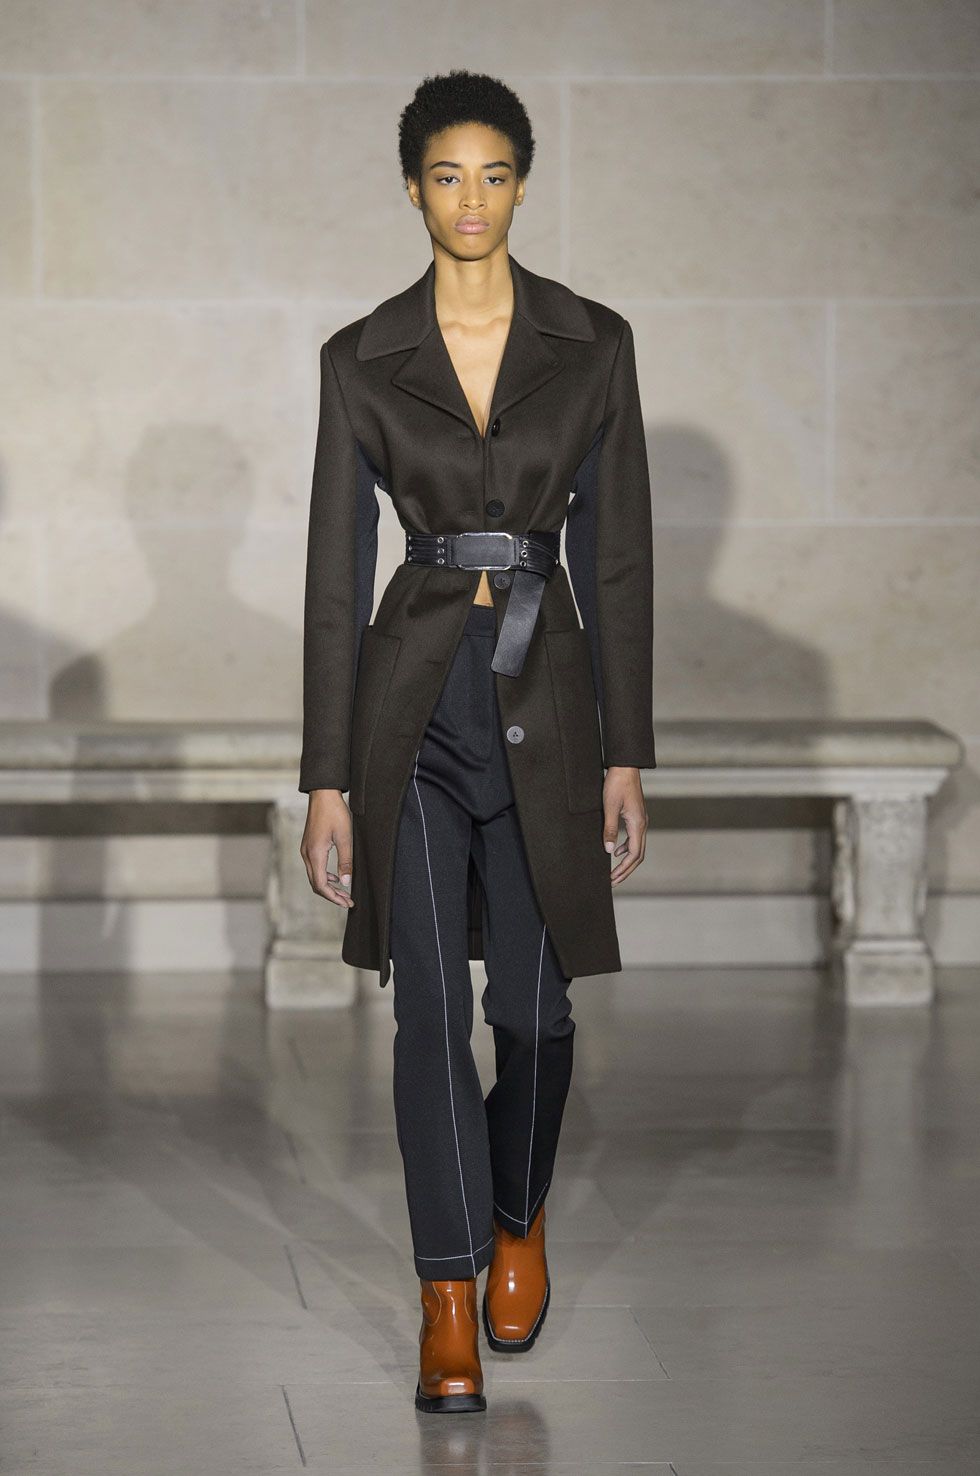 Jadore Couture on Instagram: NEW ARRIVAL✨ Louis Vuitton Black